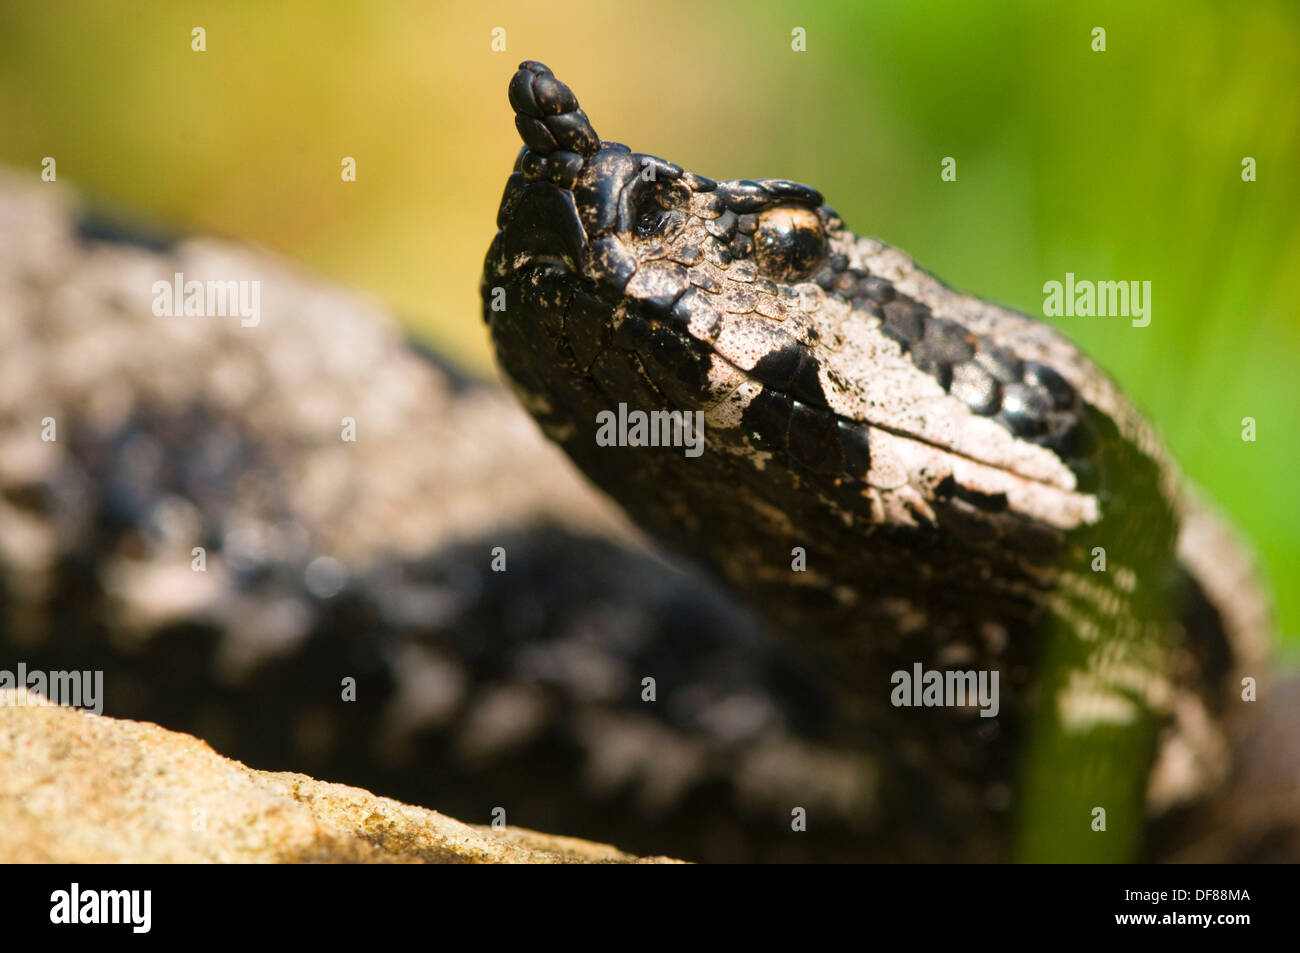 Vipera cornuta (Vipera ammodytes), serpenti velenosi, Carso, Croazia Foto Stock